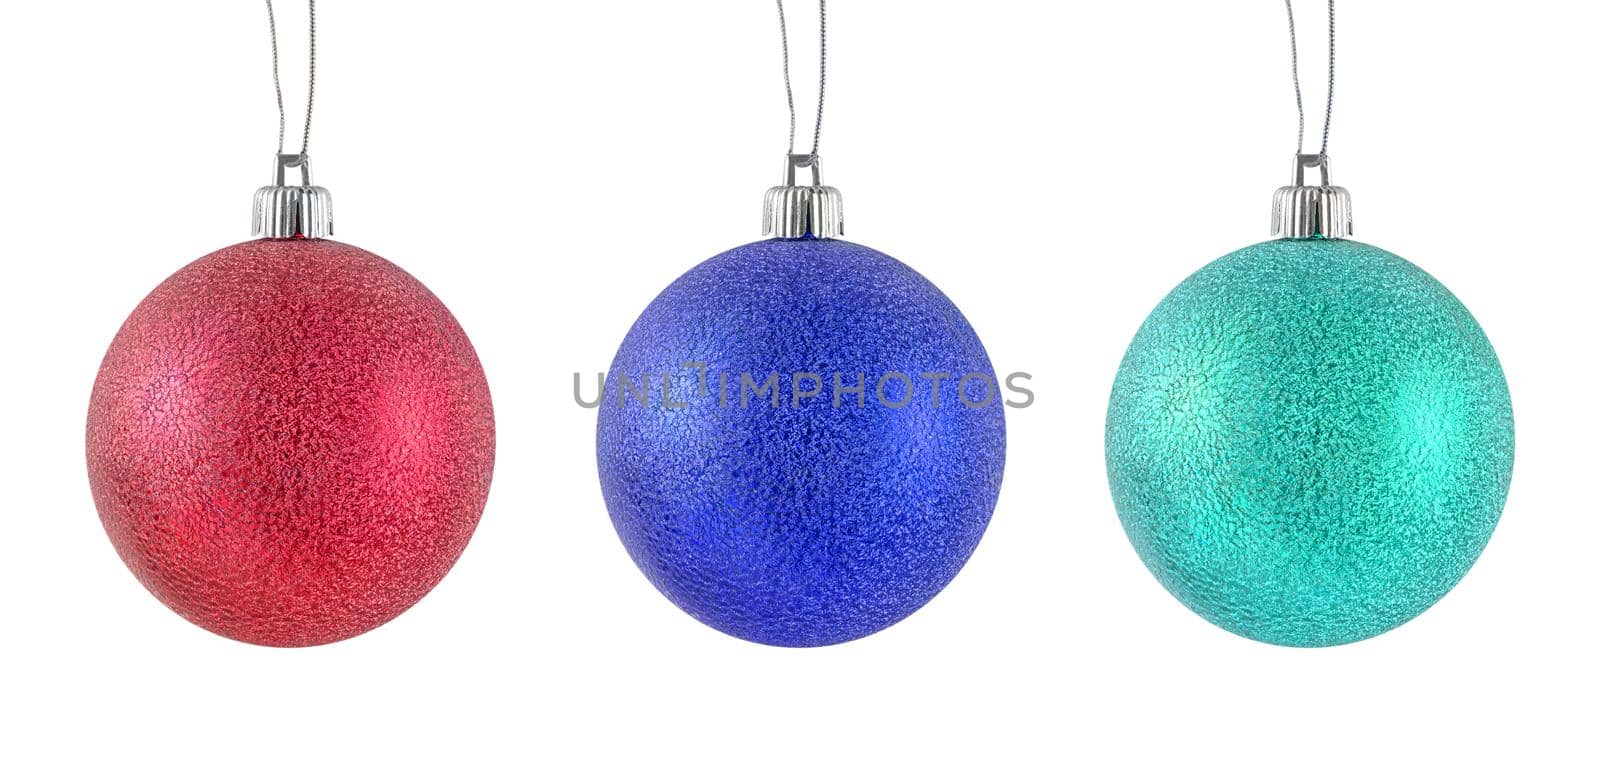 Hanging red, blue, turquoise metallic shiny Christmas baubles set isolated on white background.